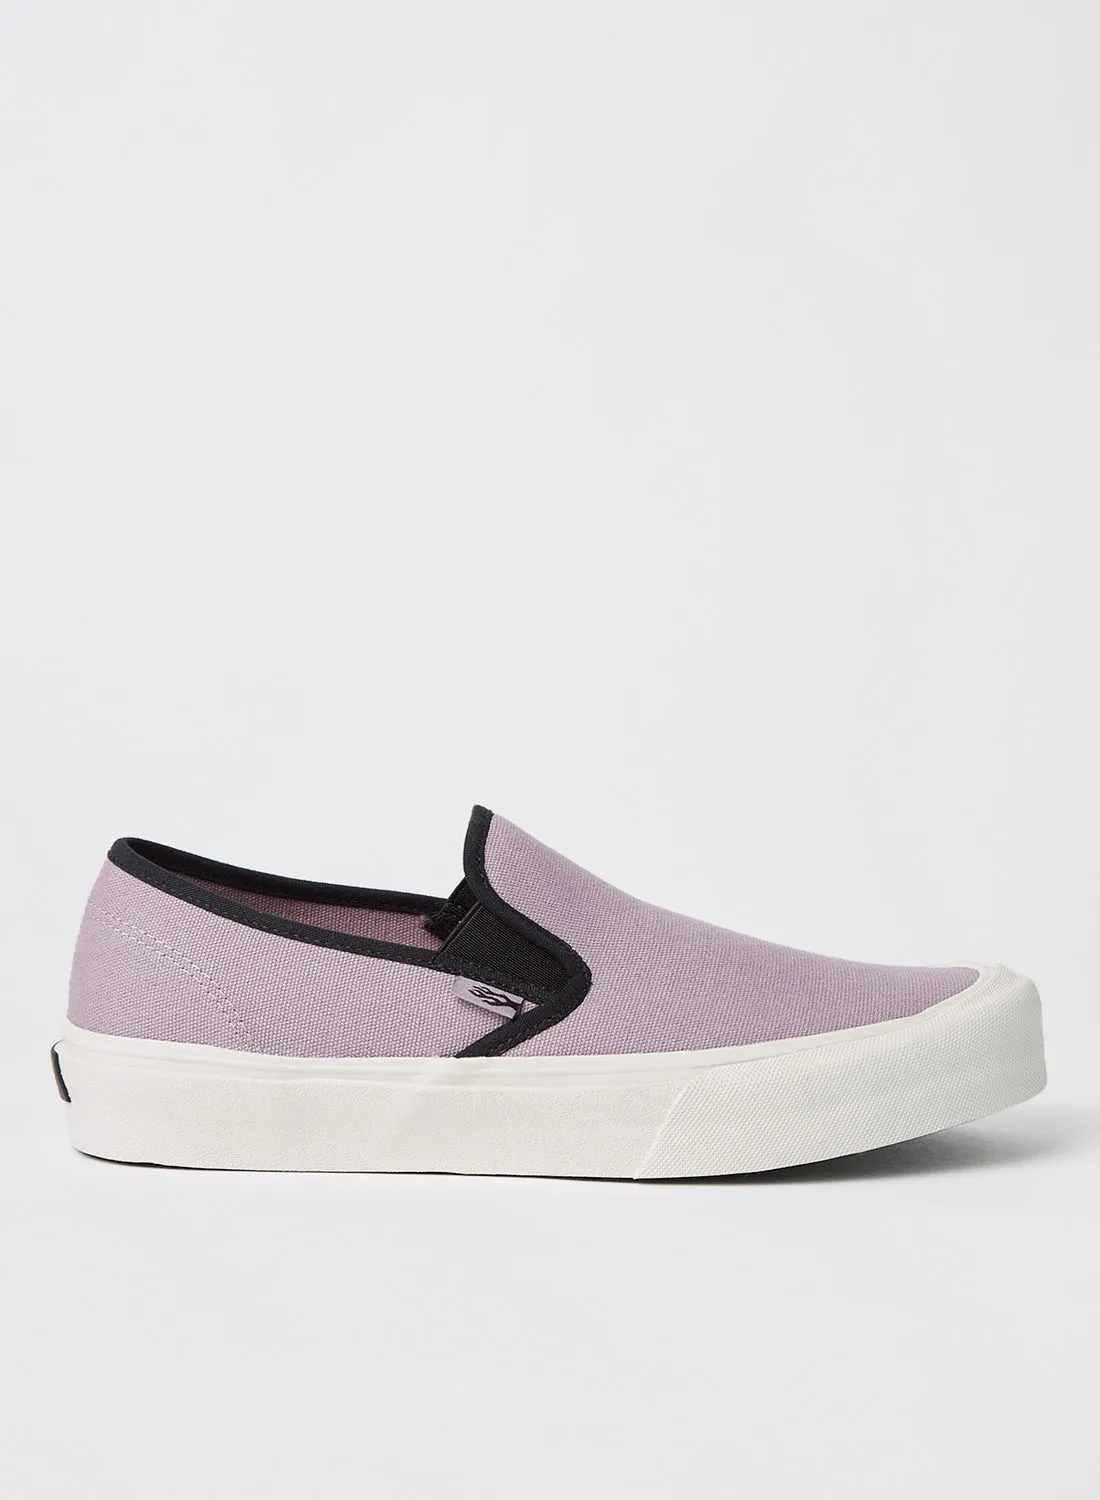 Straye Lenox Slip-On Shoes Lavender Black Cream